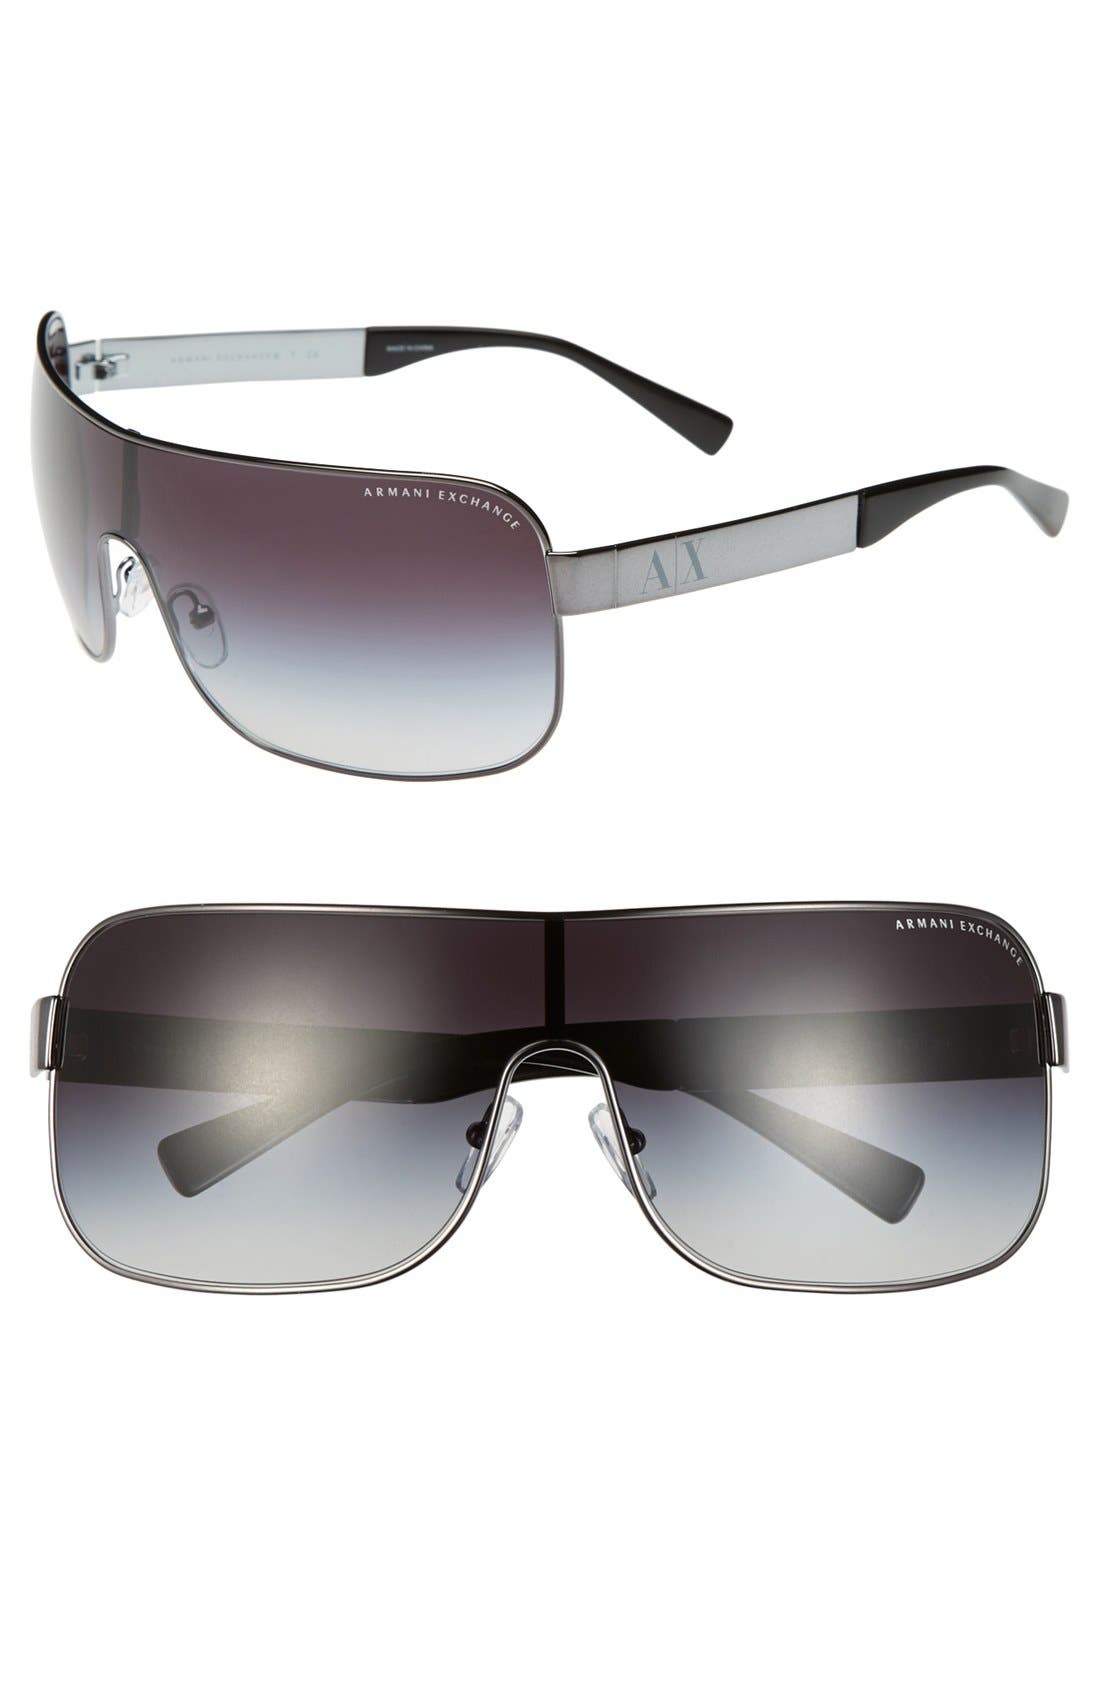 armani exchange shield sunglasses